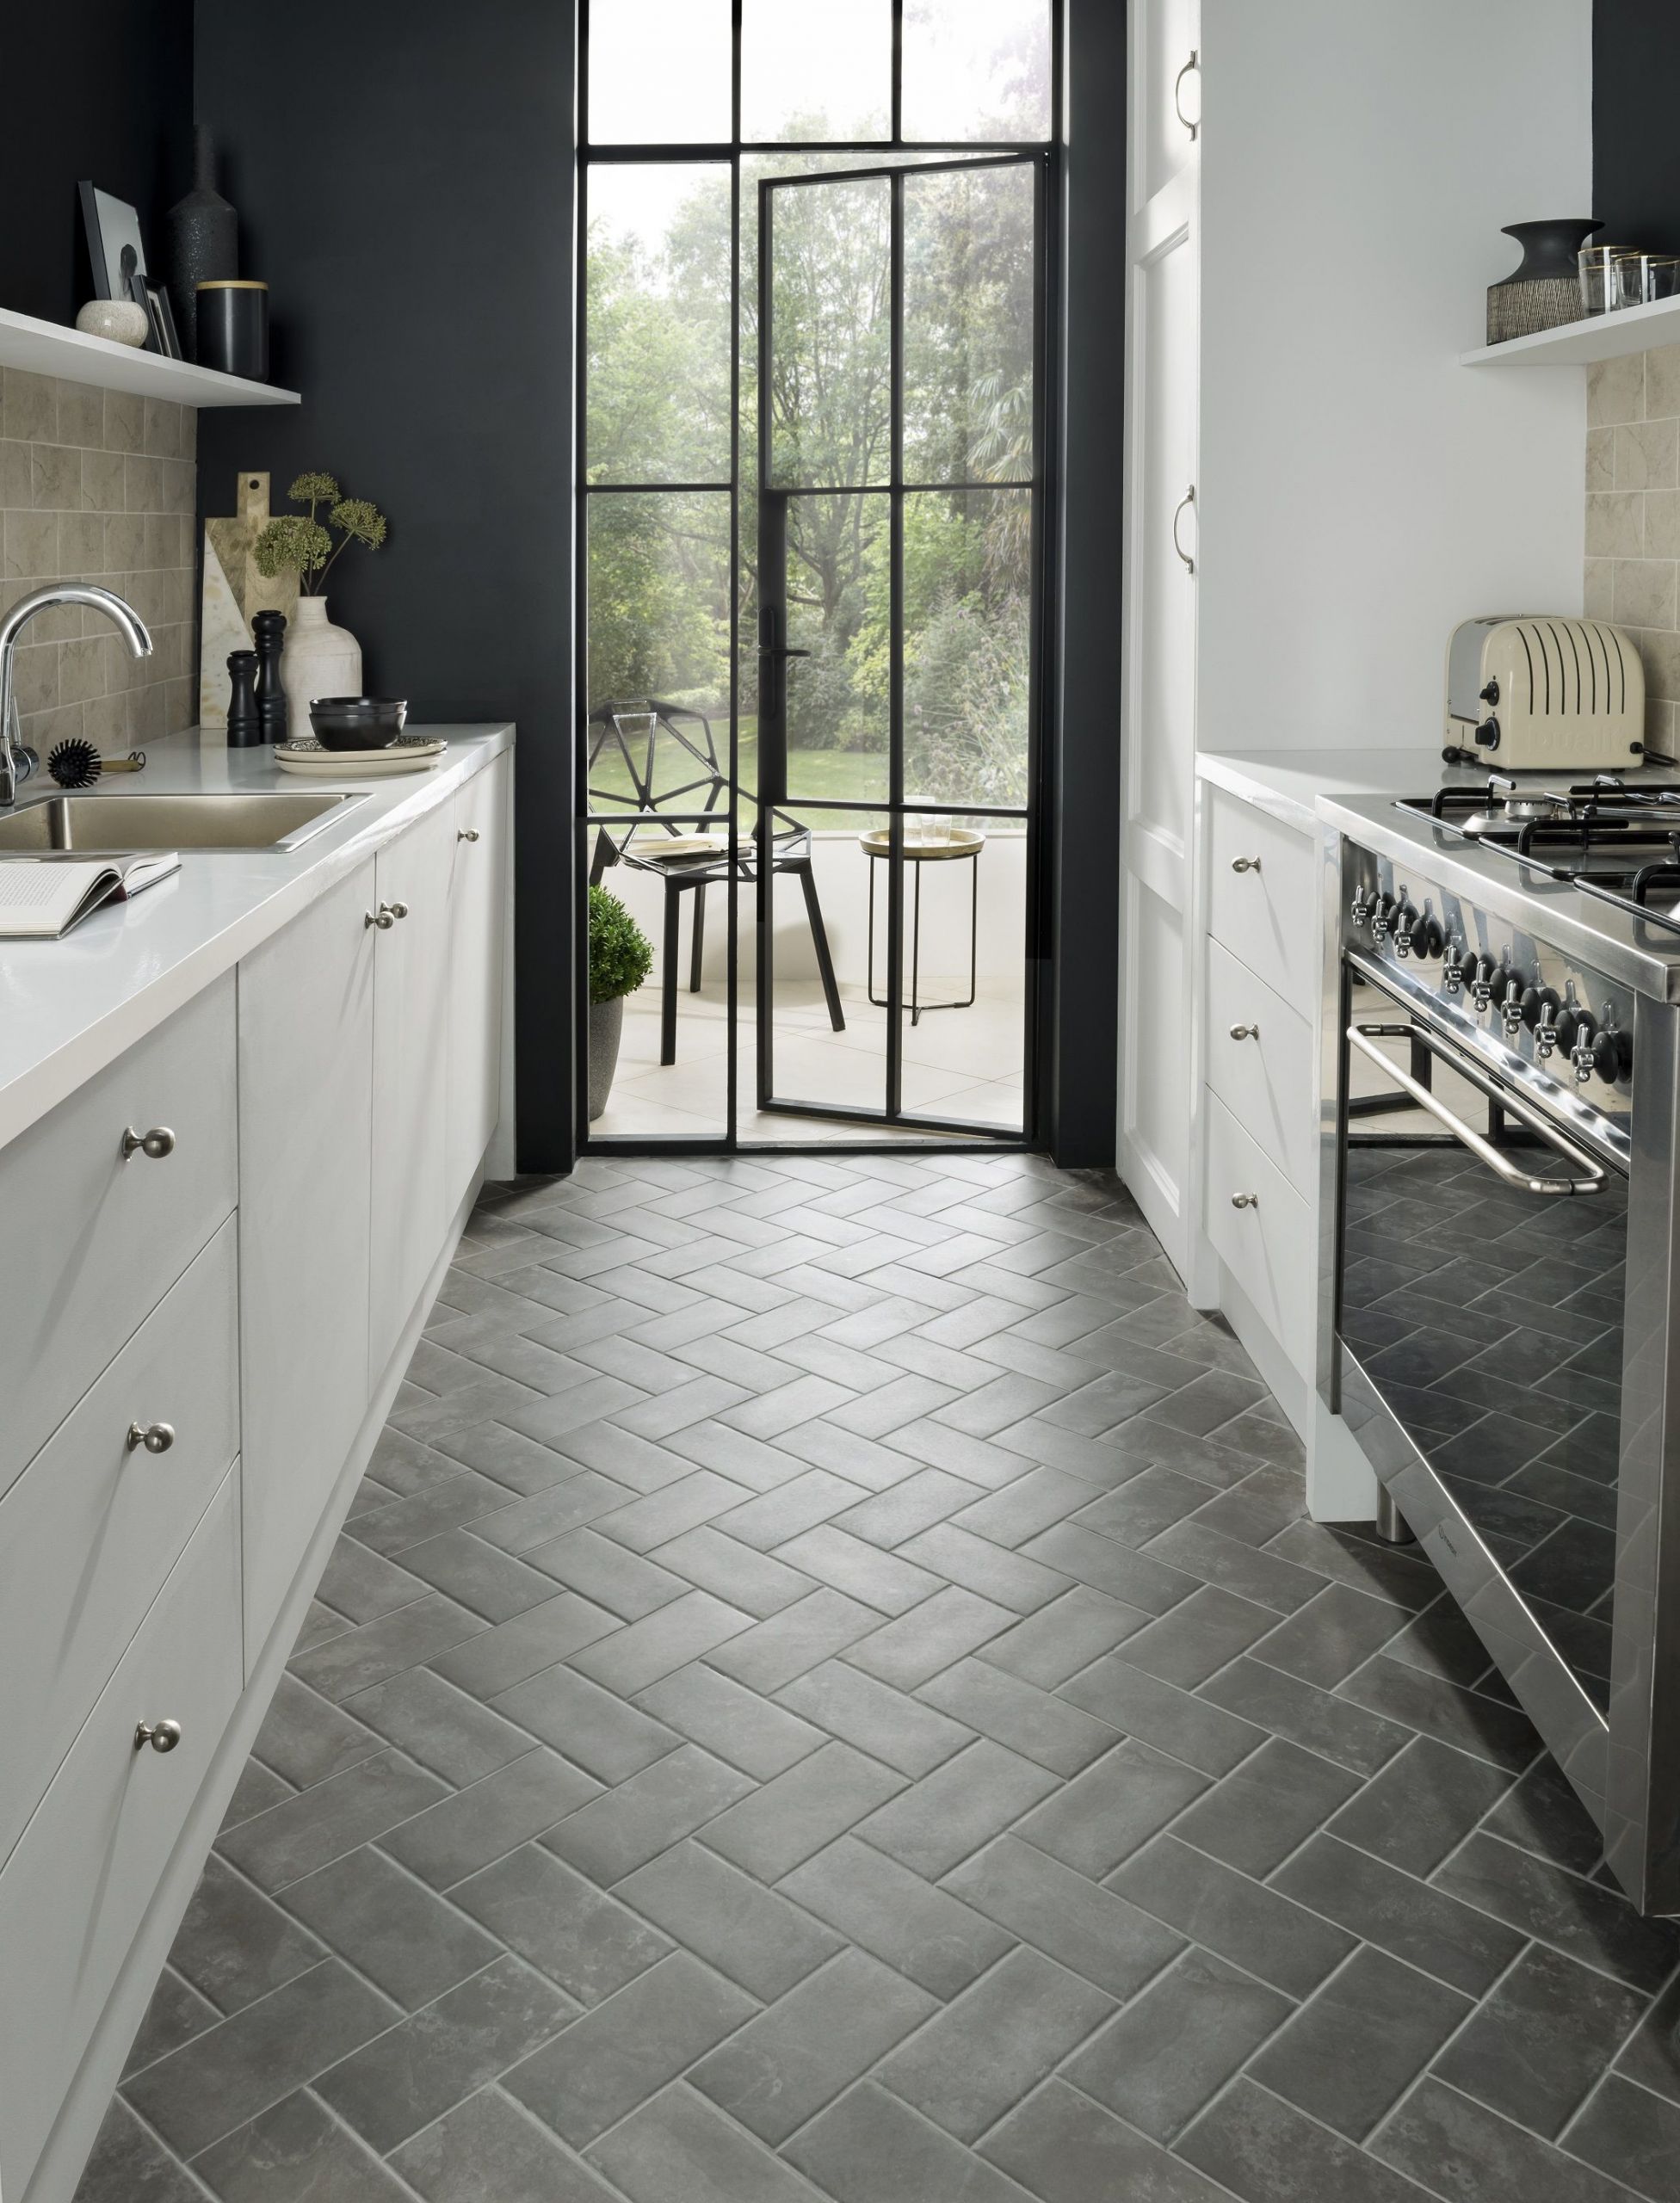 Small Kitchen Floor Tile Ideas Luxury 11 Tile Design Ideas to Make A Small Kitchen Feel Bigger